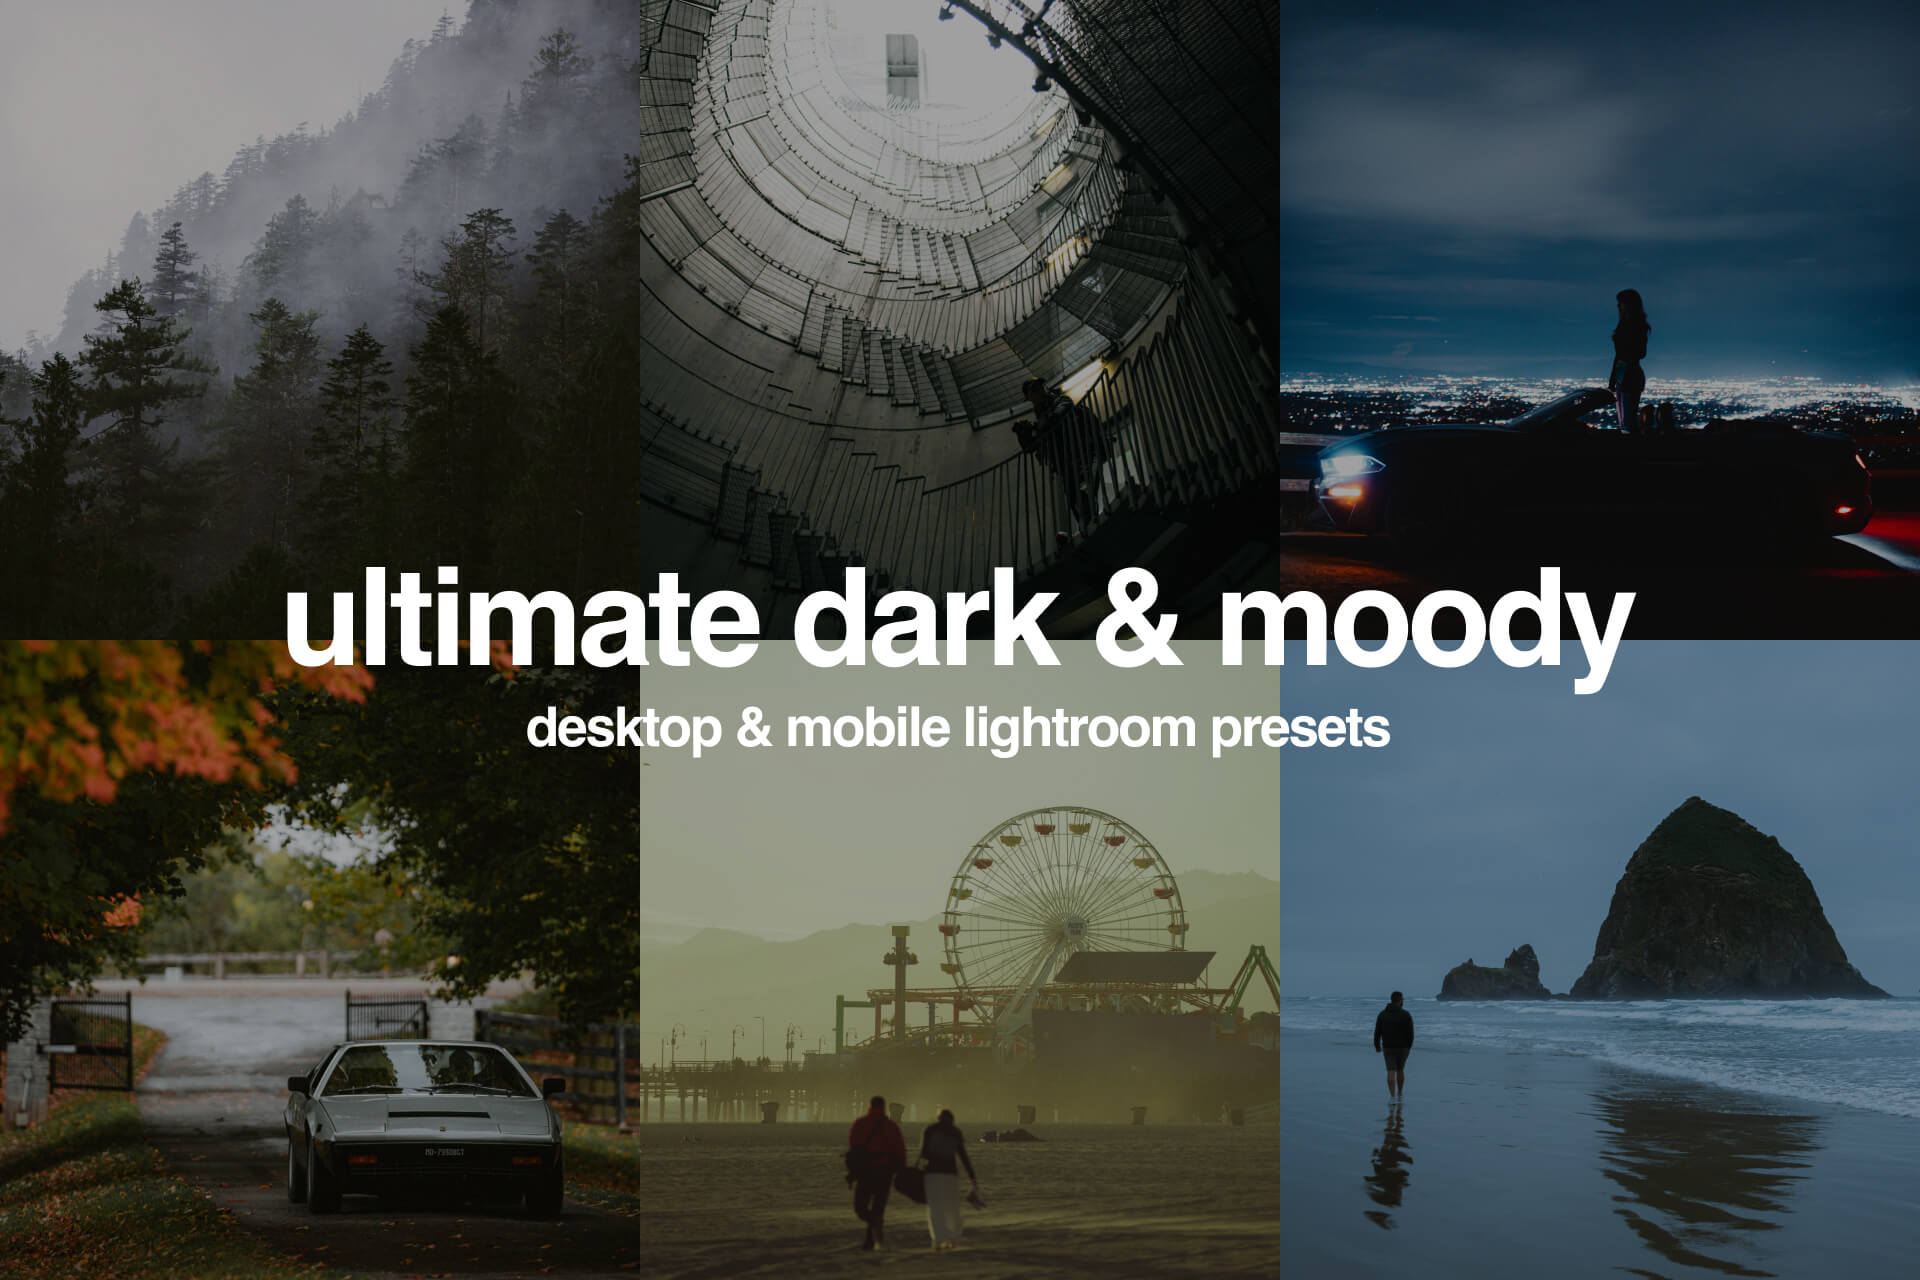 The Ultimate Dark & Moody Preset Pack